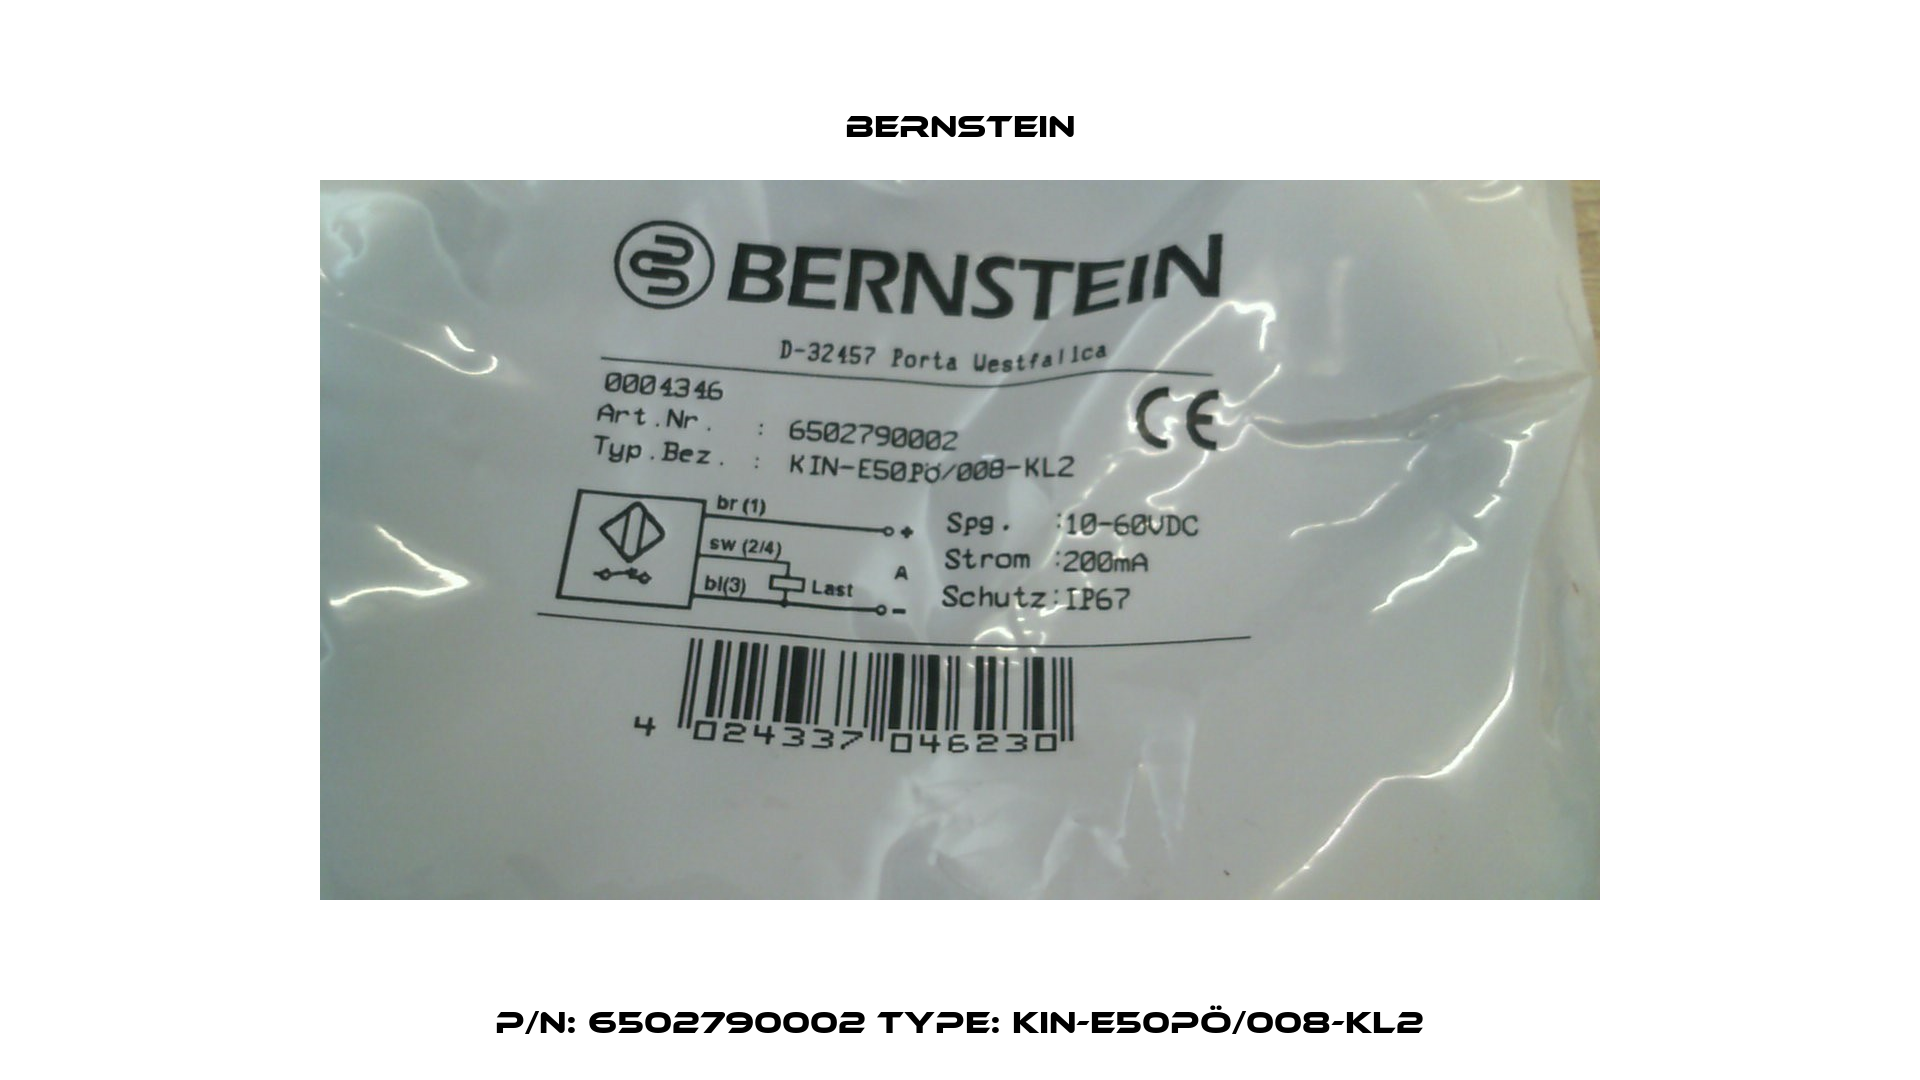 P/N: 6502790002 Type: KIN-E50PÖ/008-KL2 Bernstein